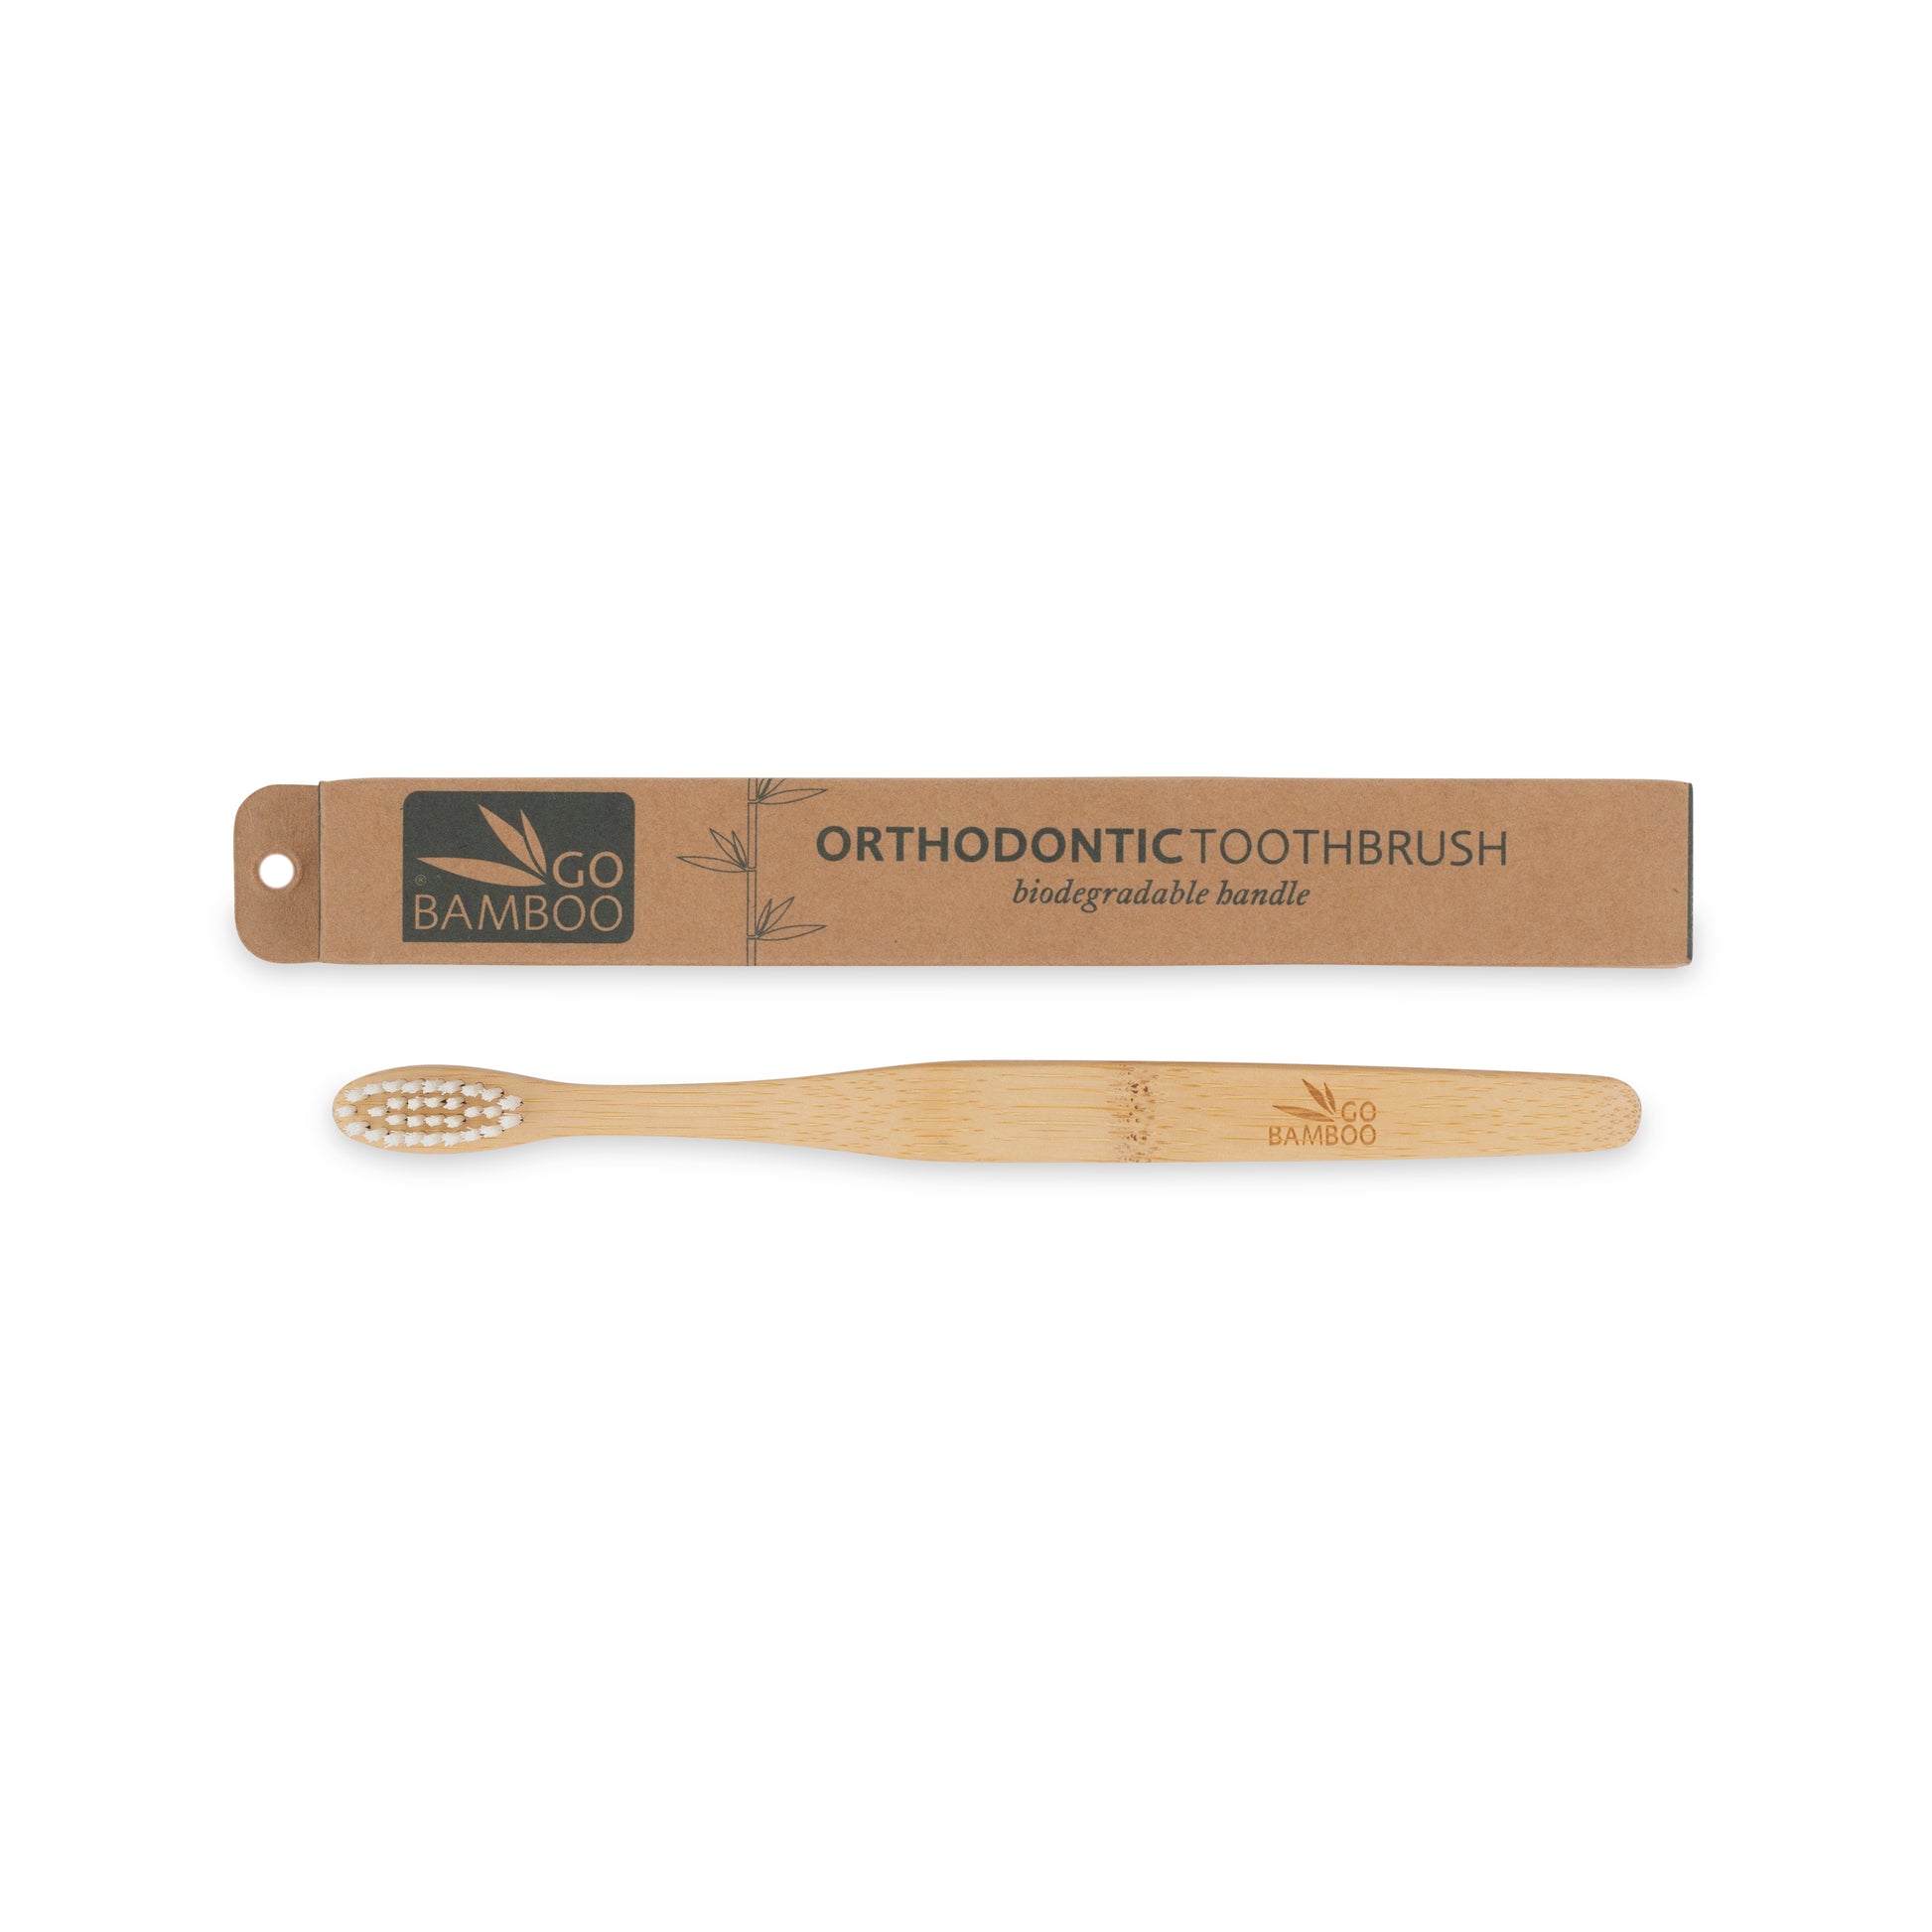 Biodegradable Orthodontic Toothbrush - Natural bamboo - Go Bamboo